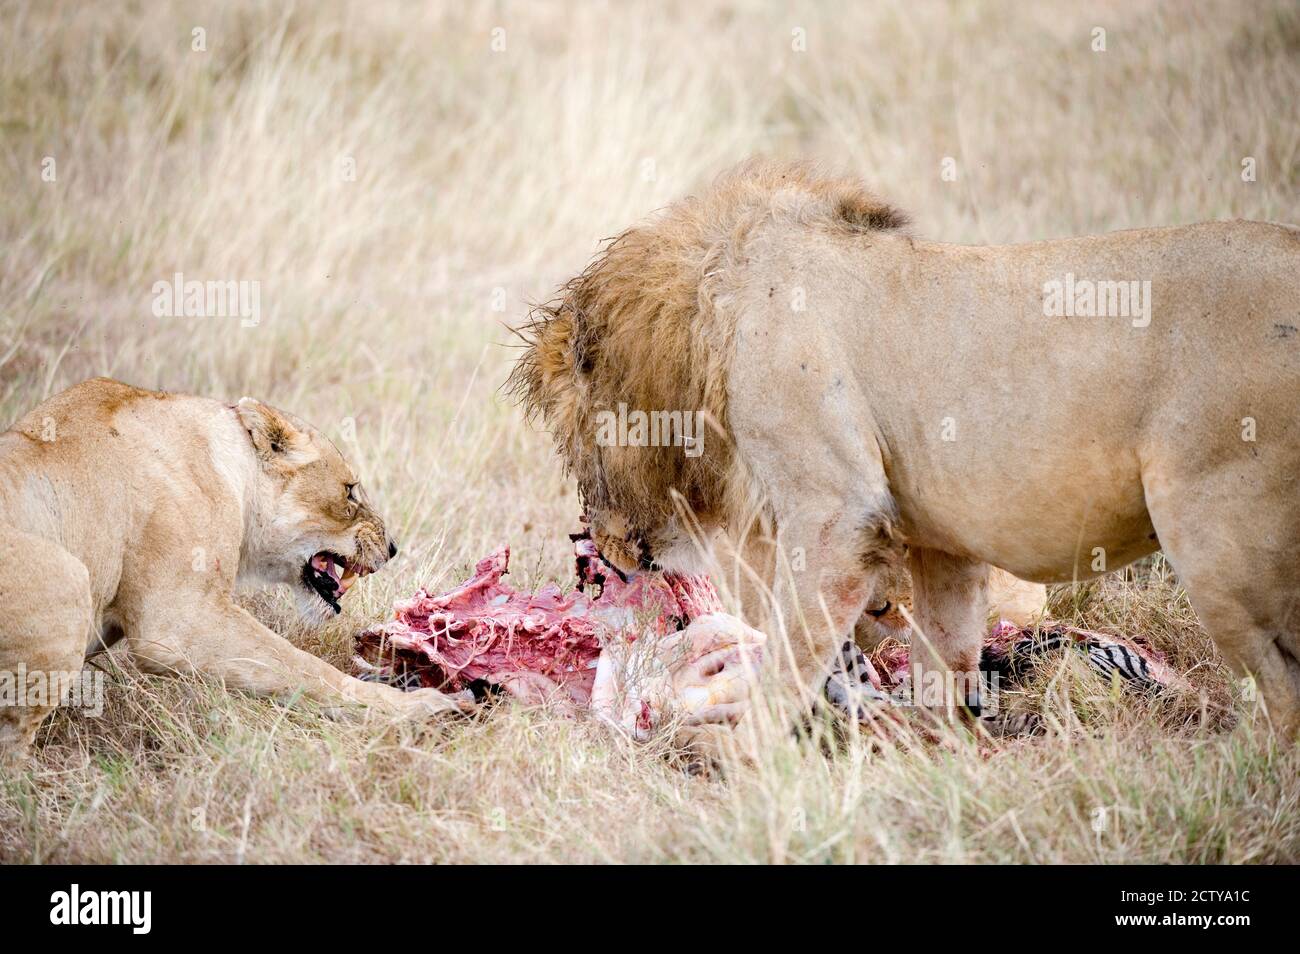 León y una Leona (Panthera leo) comiendo una cebra, Cráter Ngorongoro, Ngorongoro, Tanzania Foto de stock